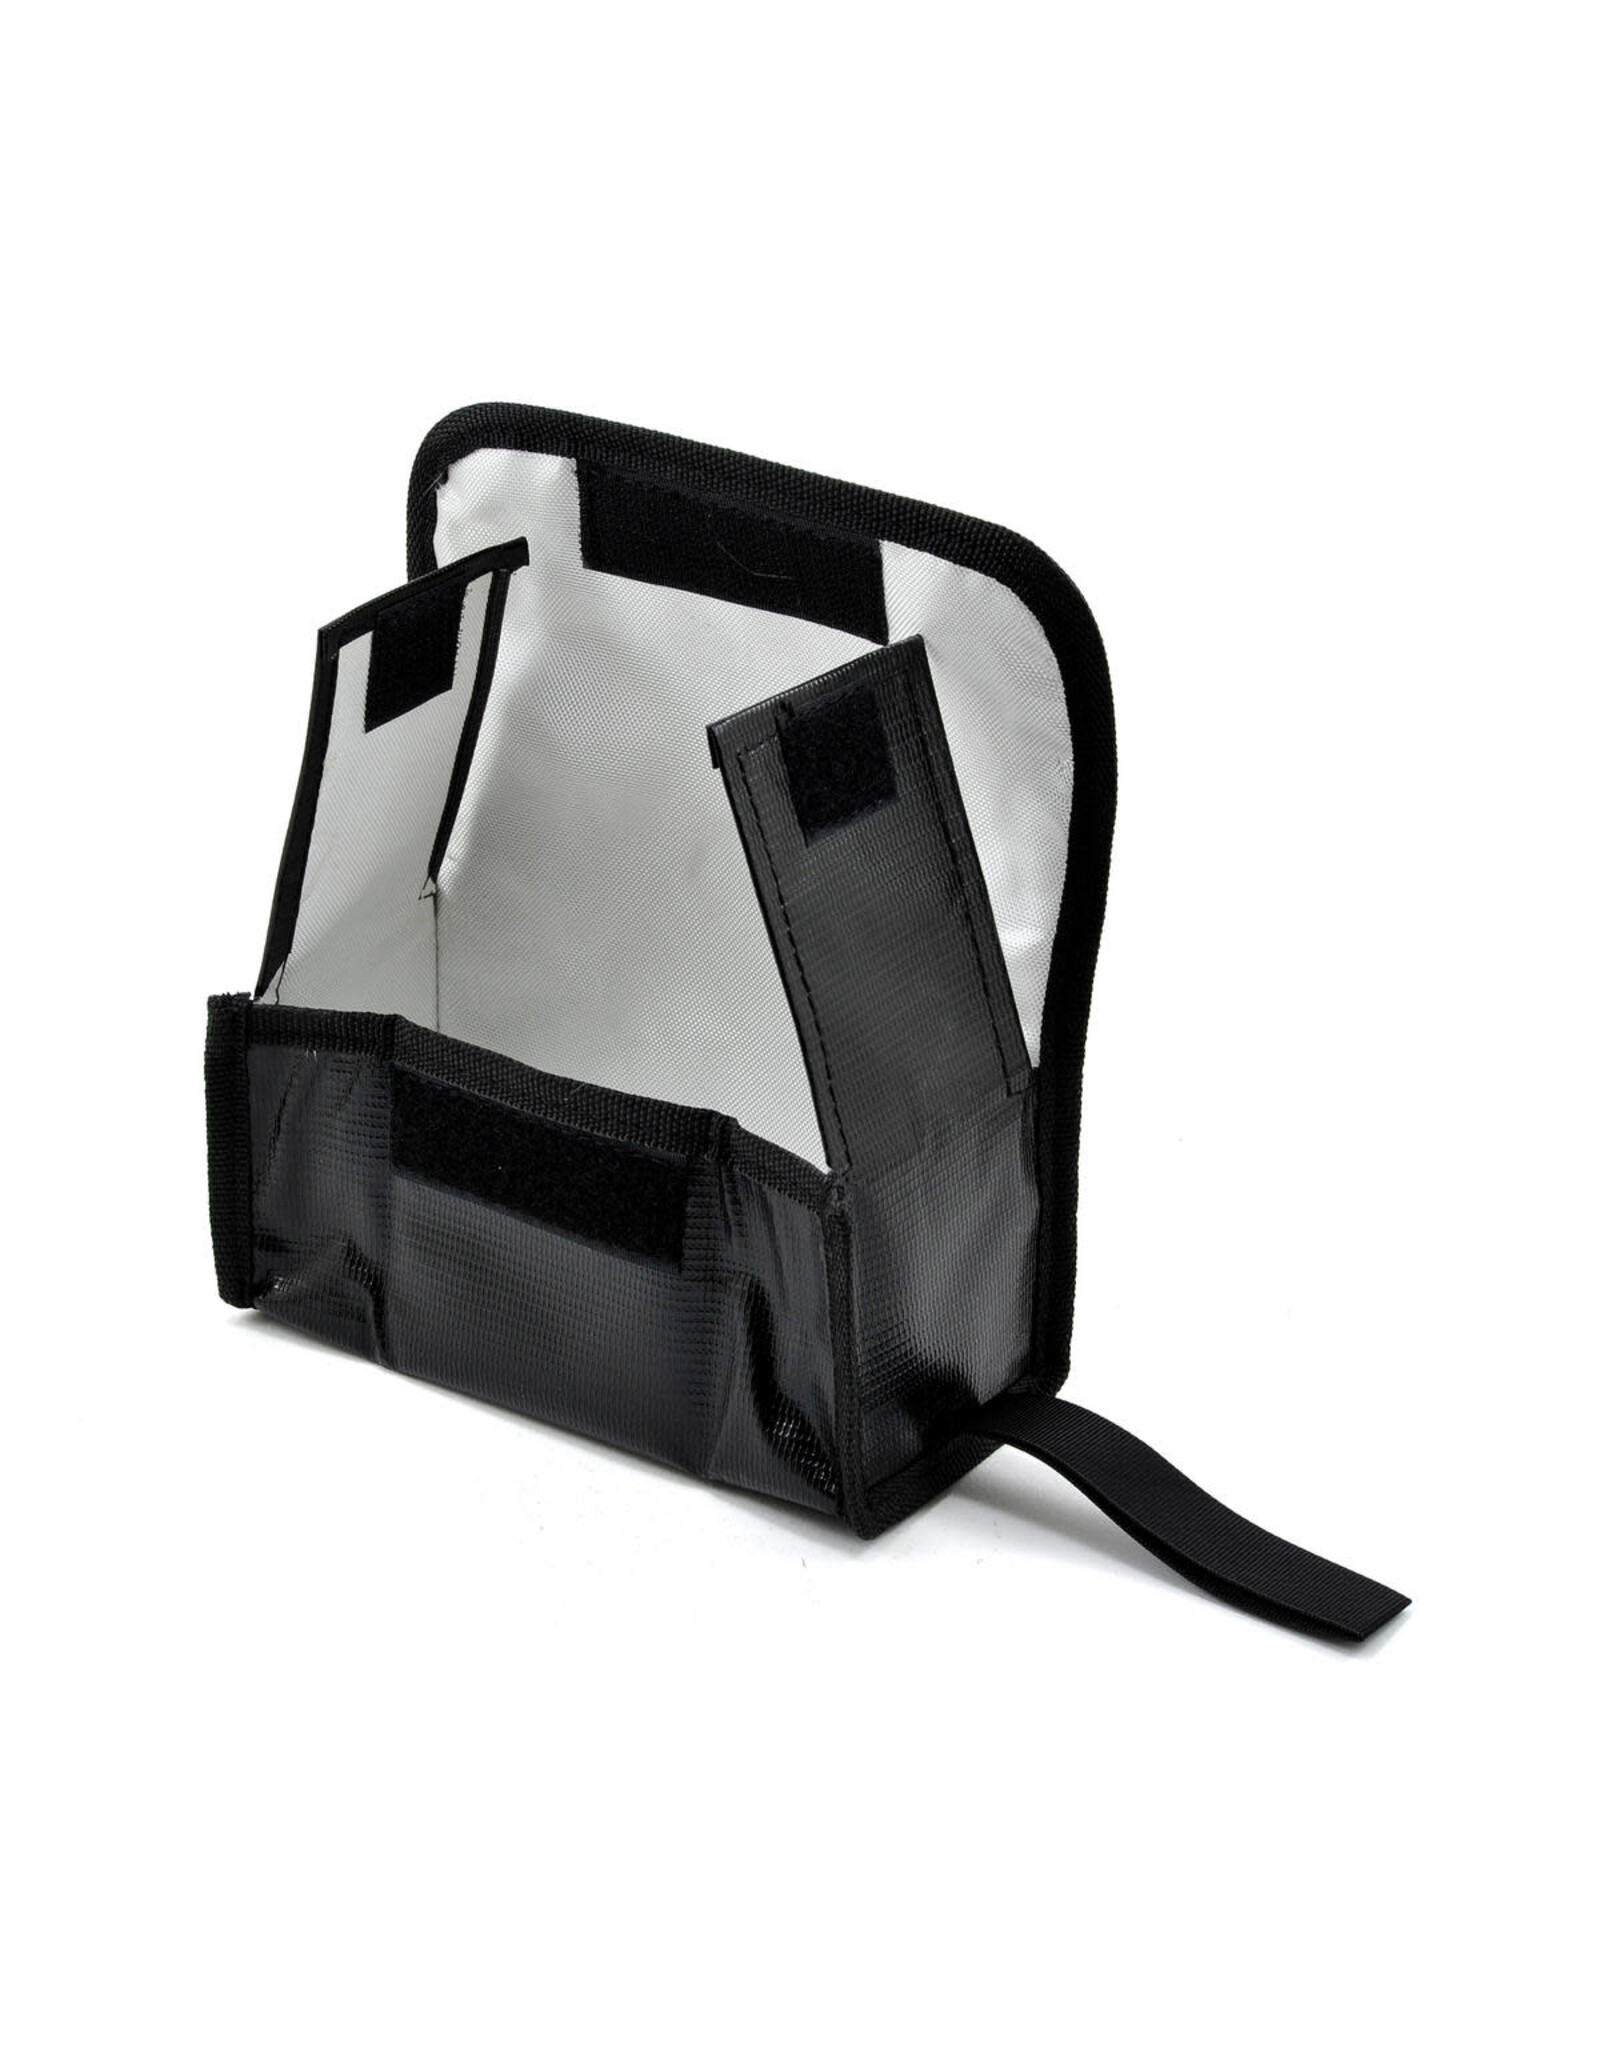 Protek RC ProTek RC "Flak Jacket" Flame Resistant LiPo Polymer Charging Bag (16x6.5x7cm)